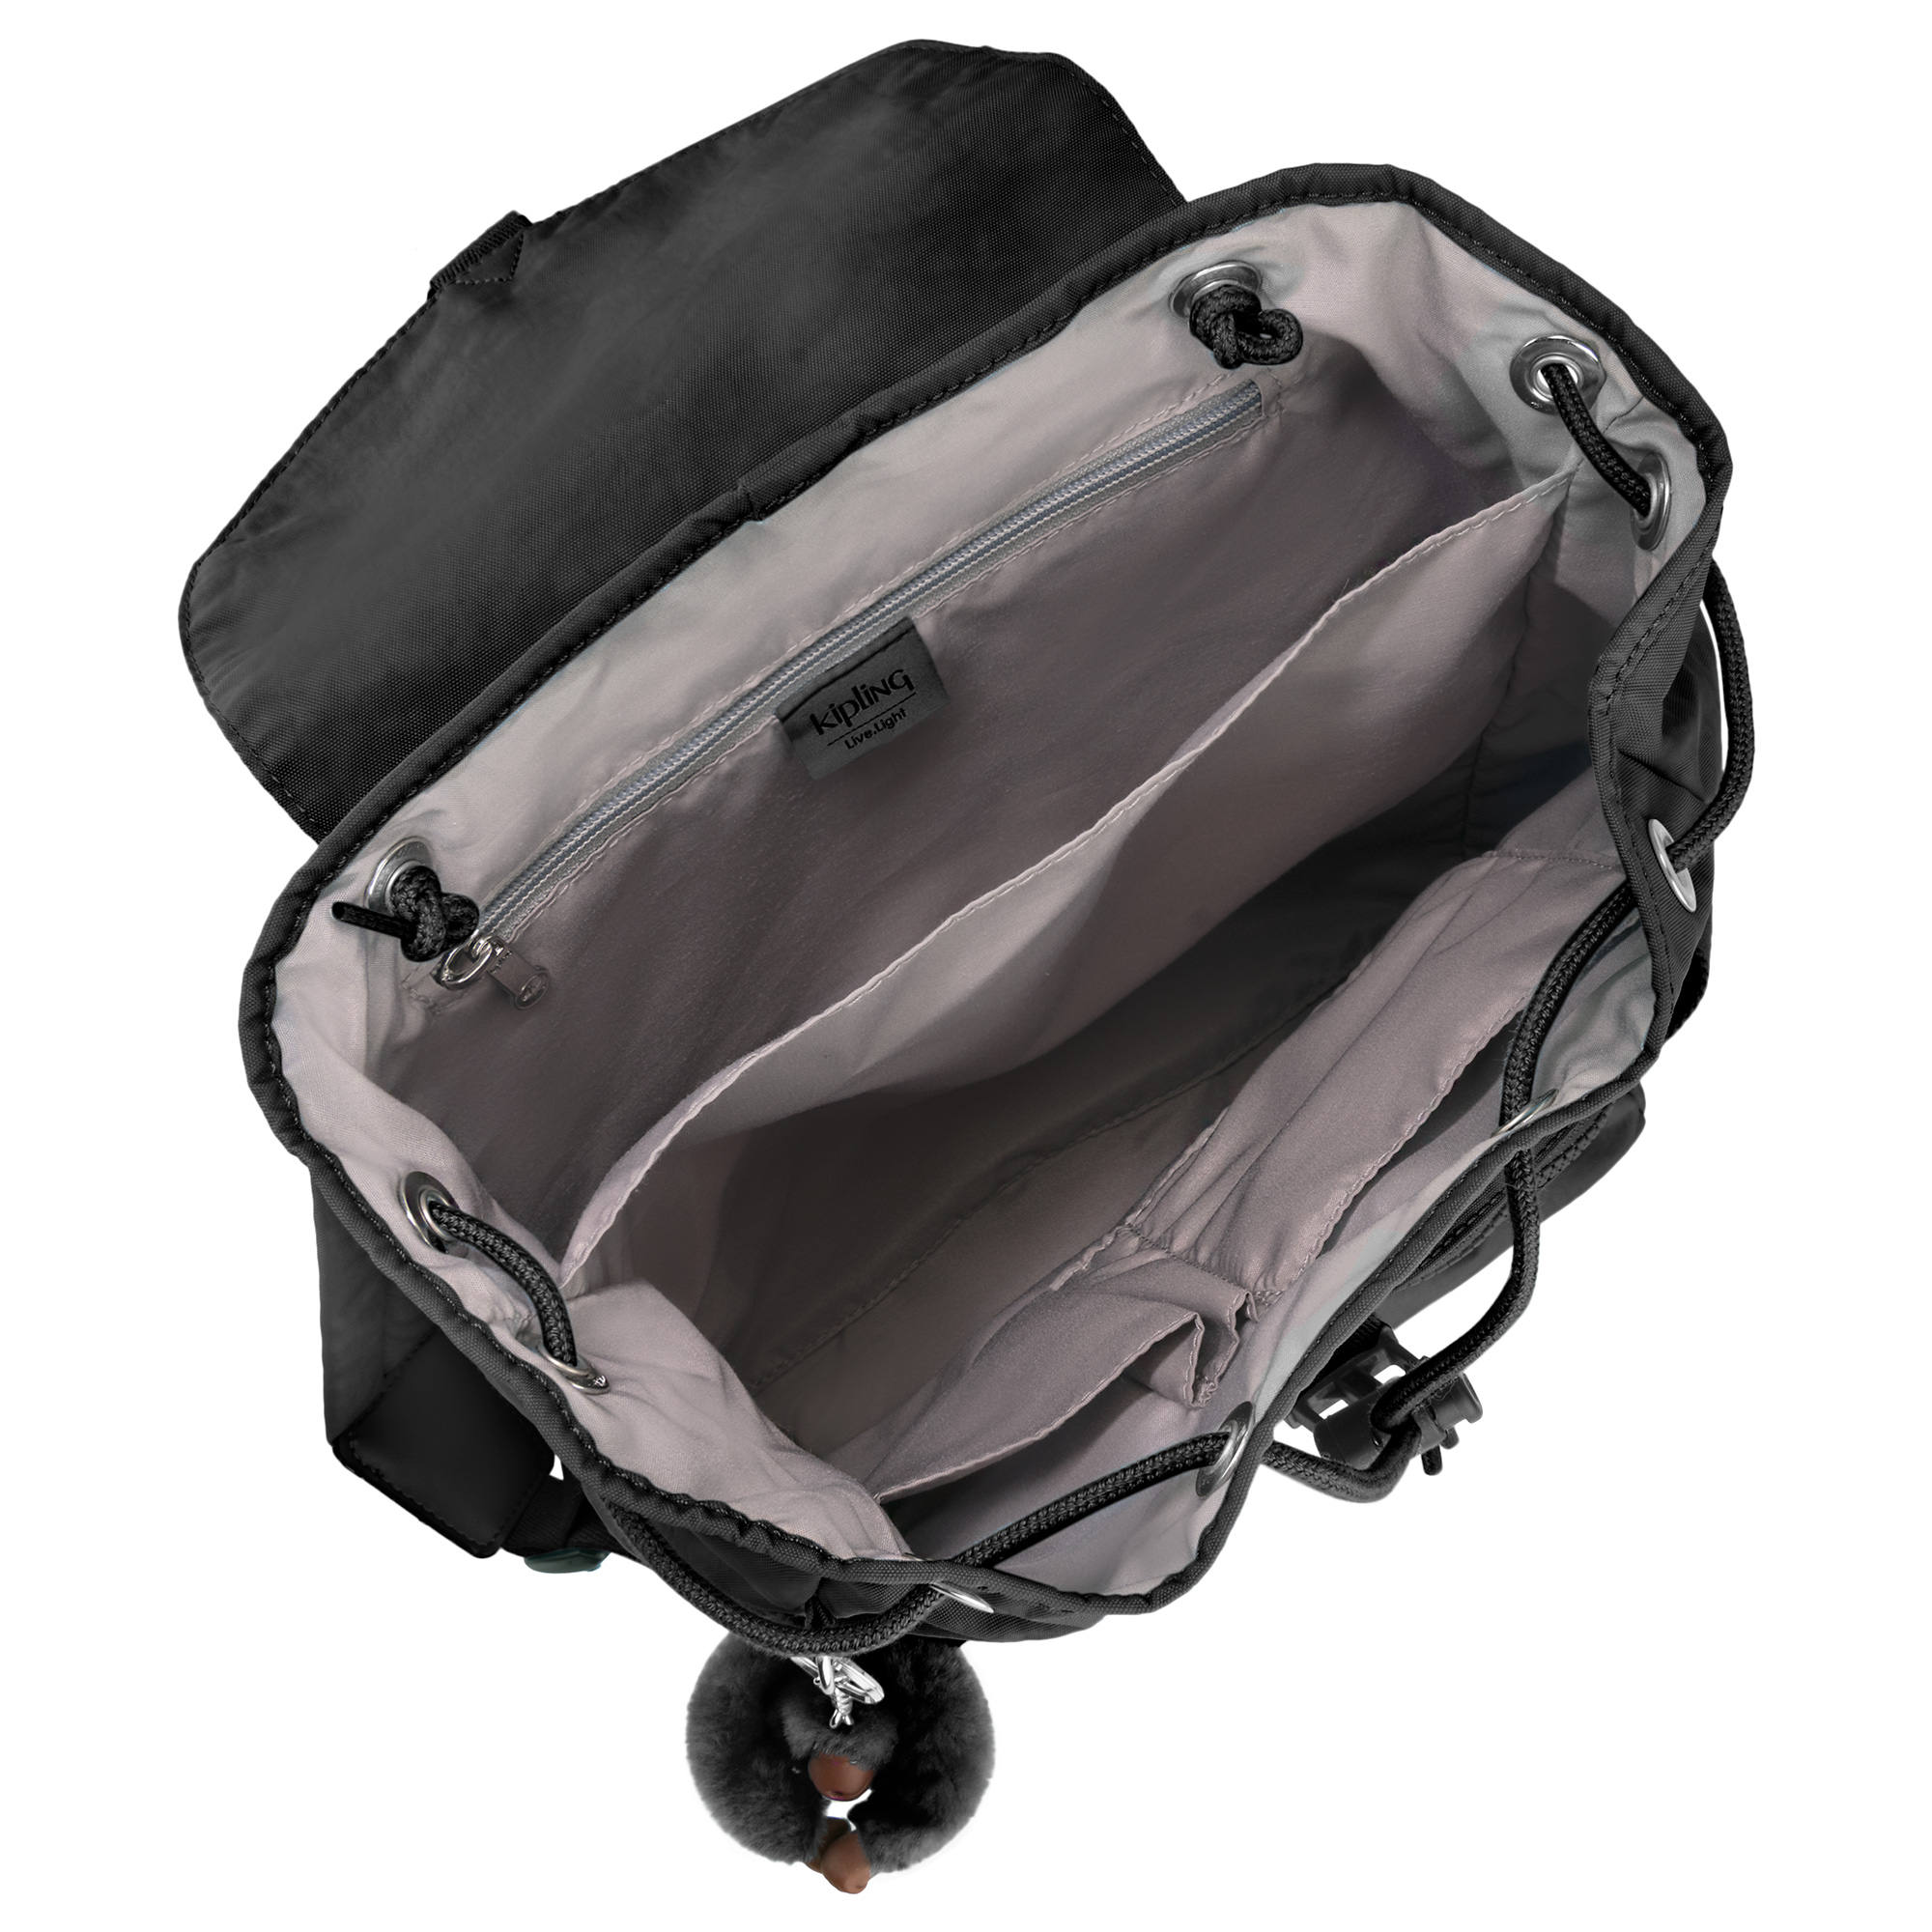 Kipling Keeper Small Backpack - Black